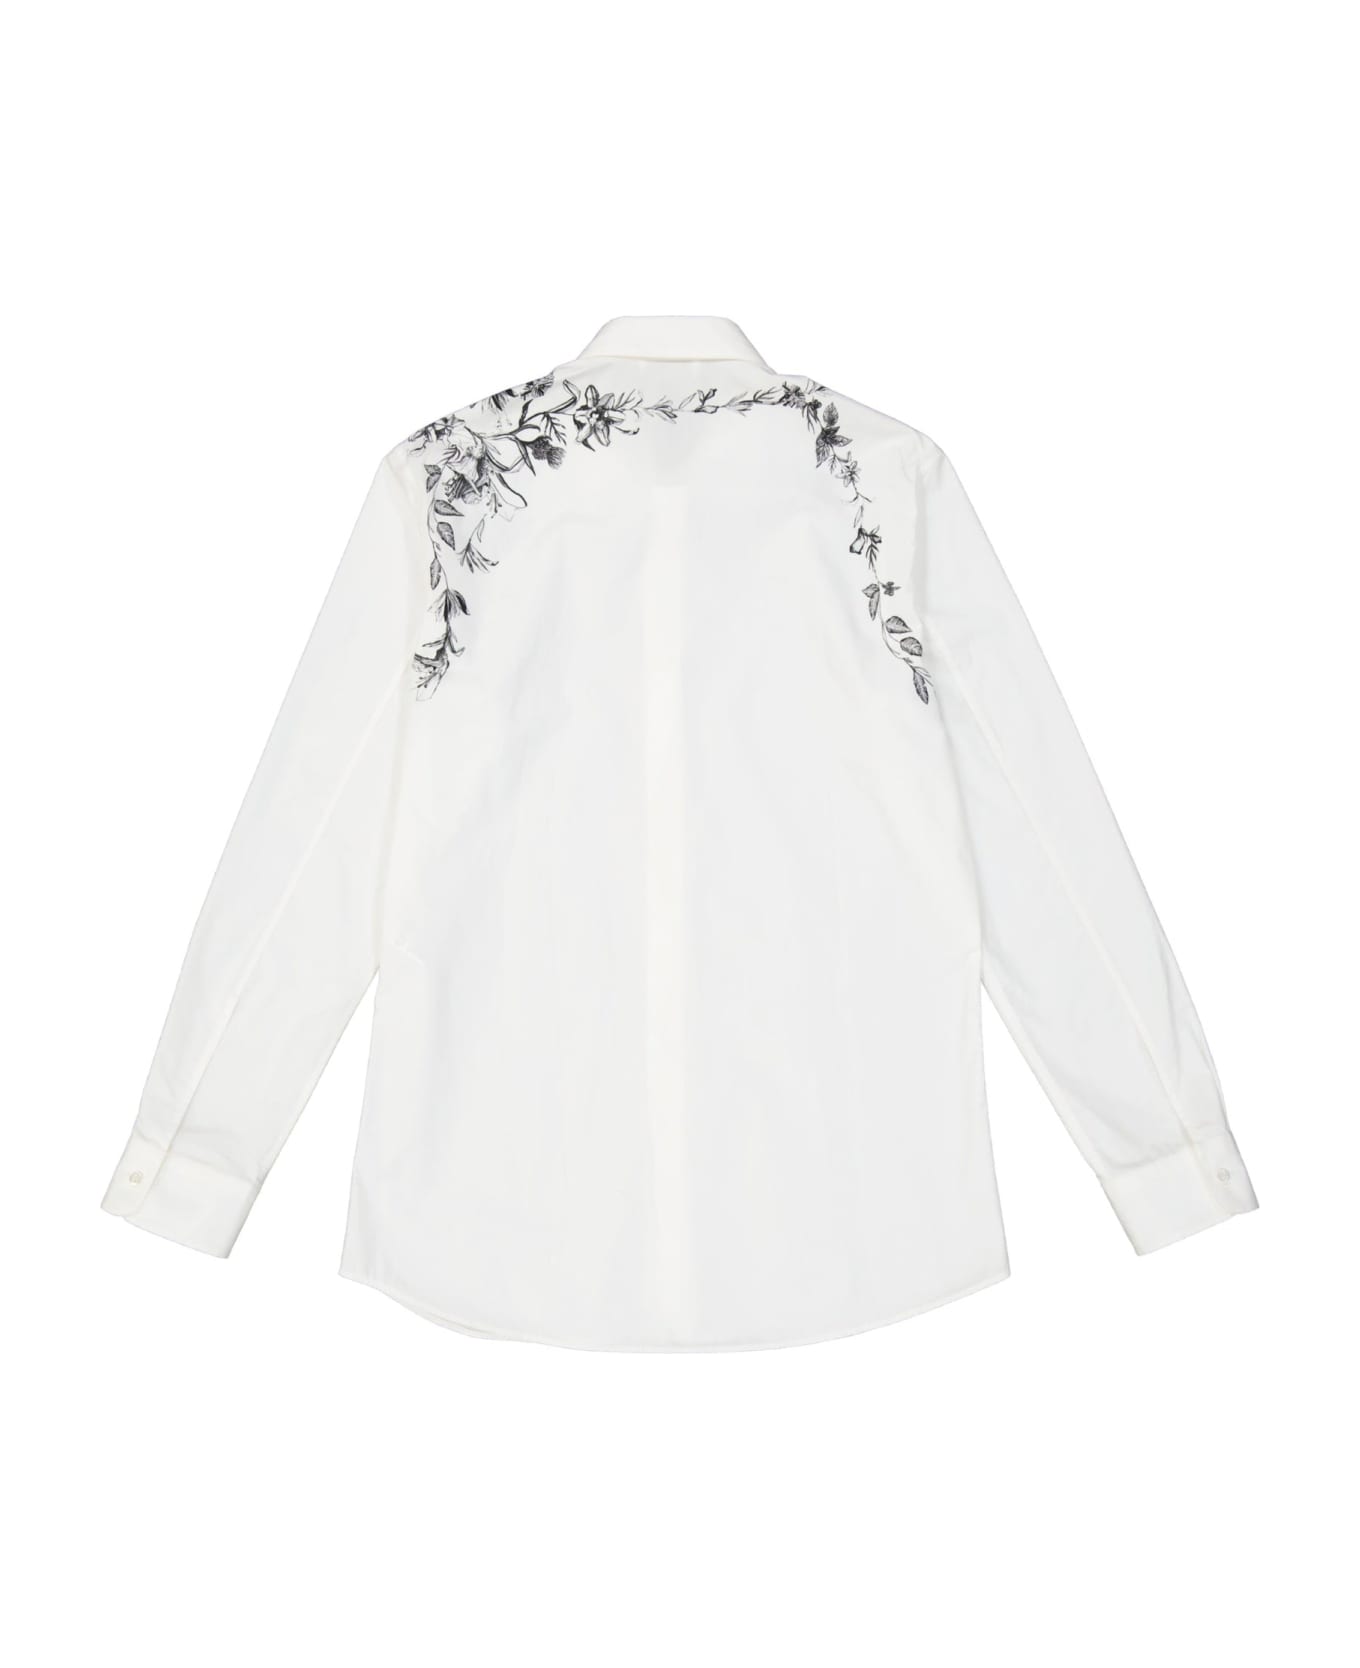 Alexander McQueen Printed Shirt - White